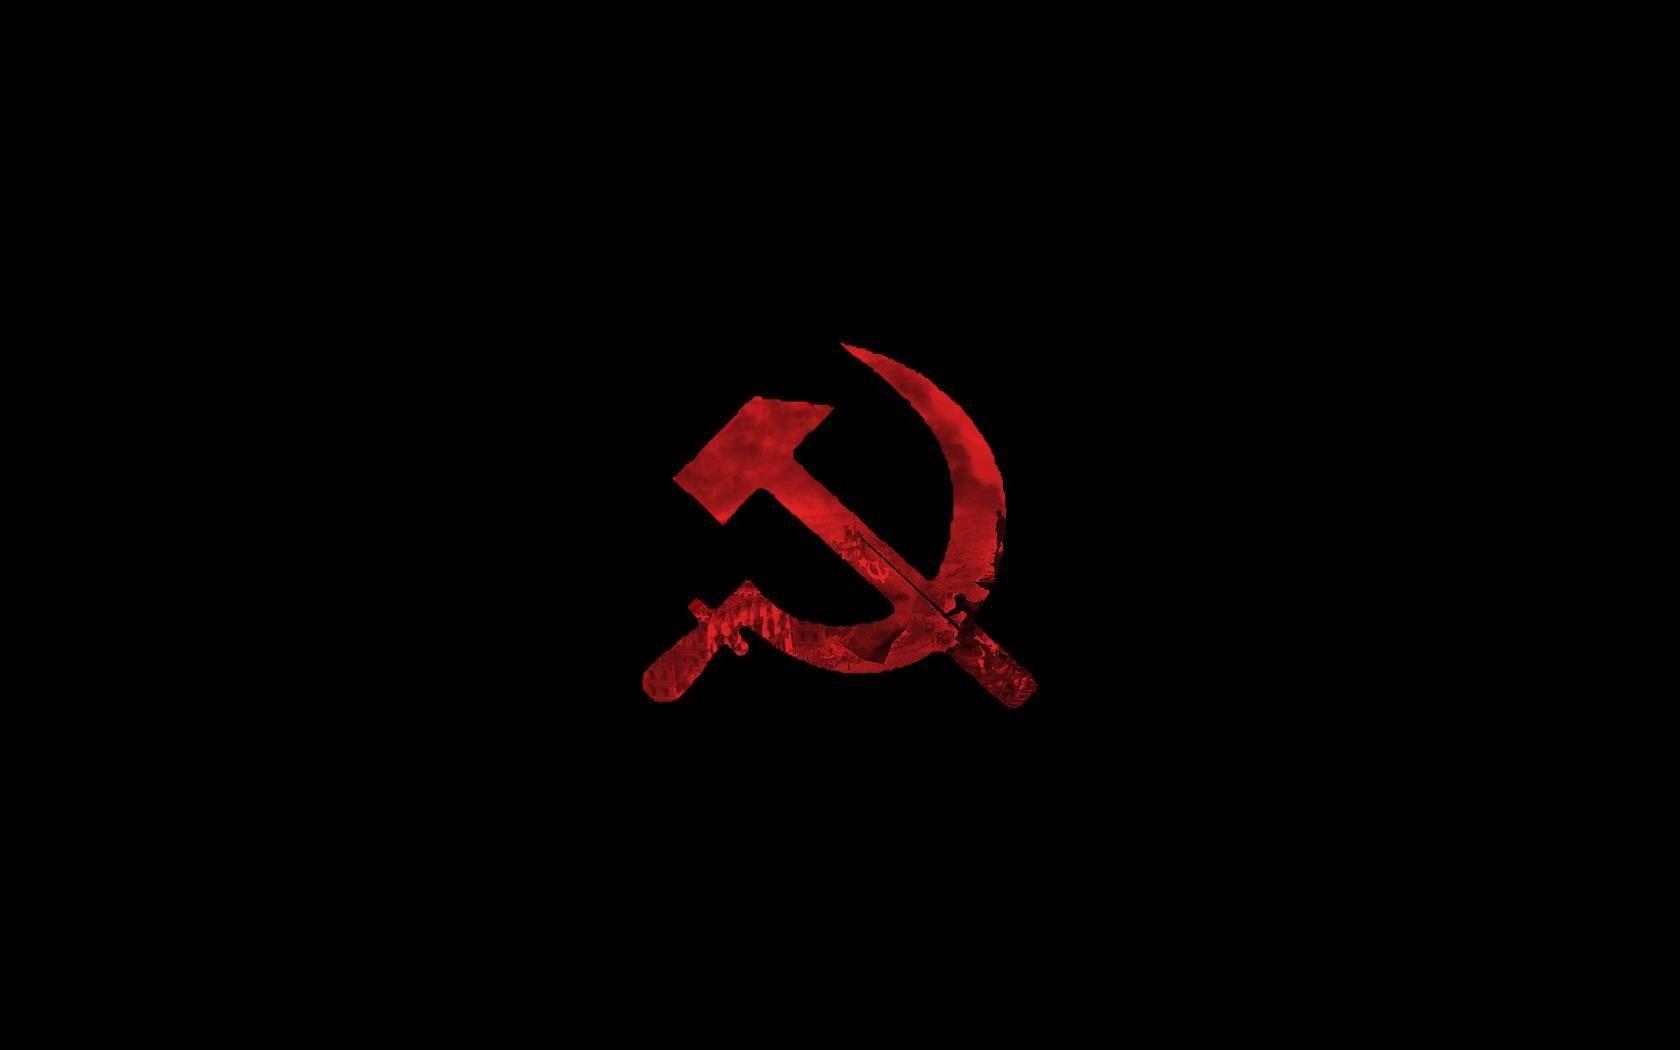 Soviet Union Logo Wallpaper Image & Picture